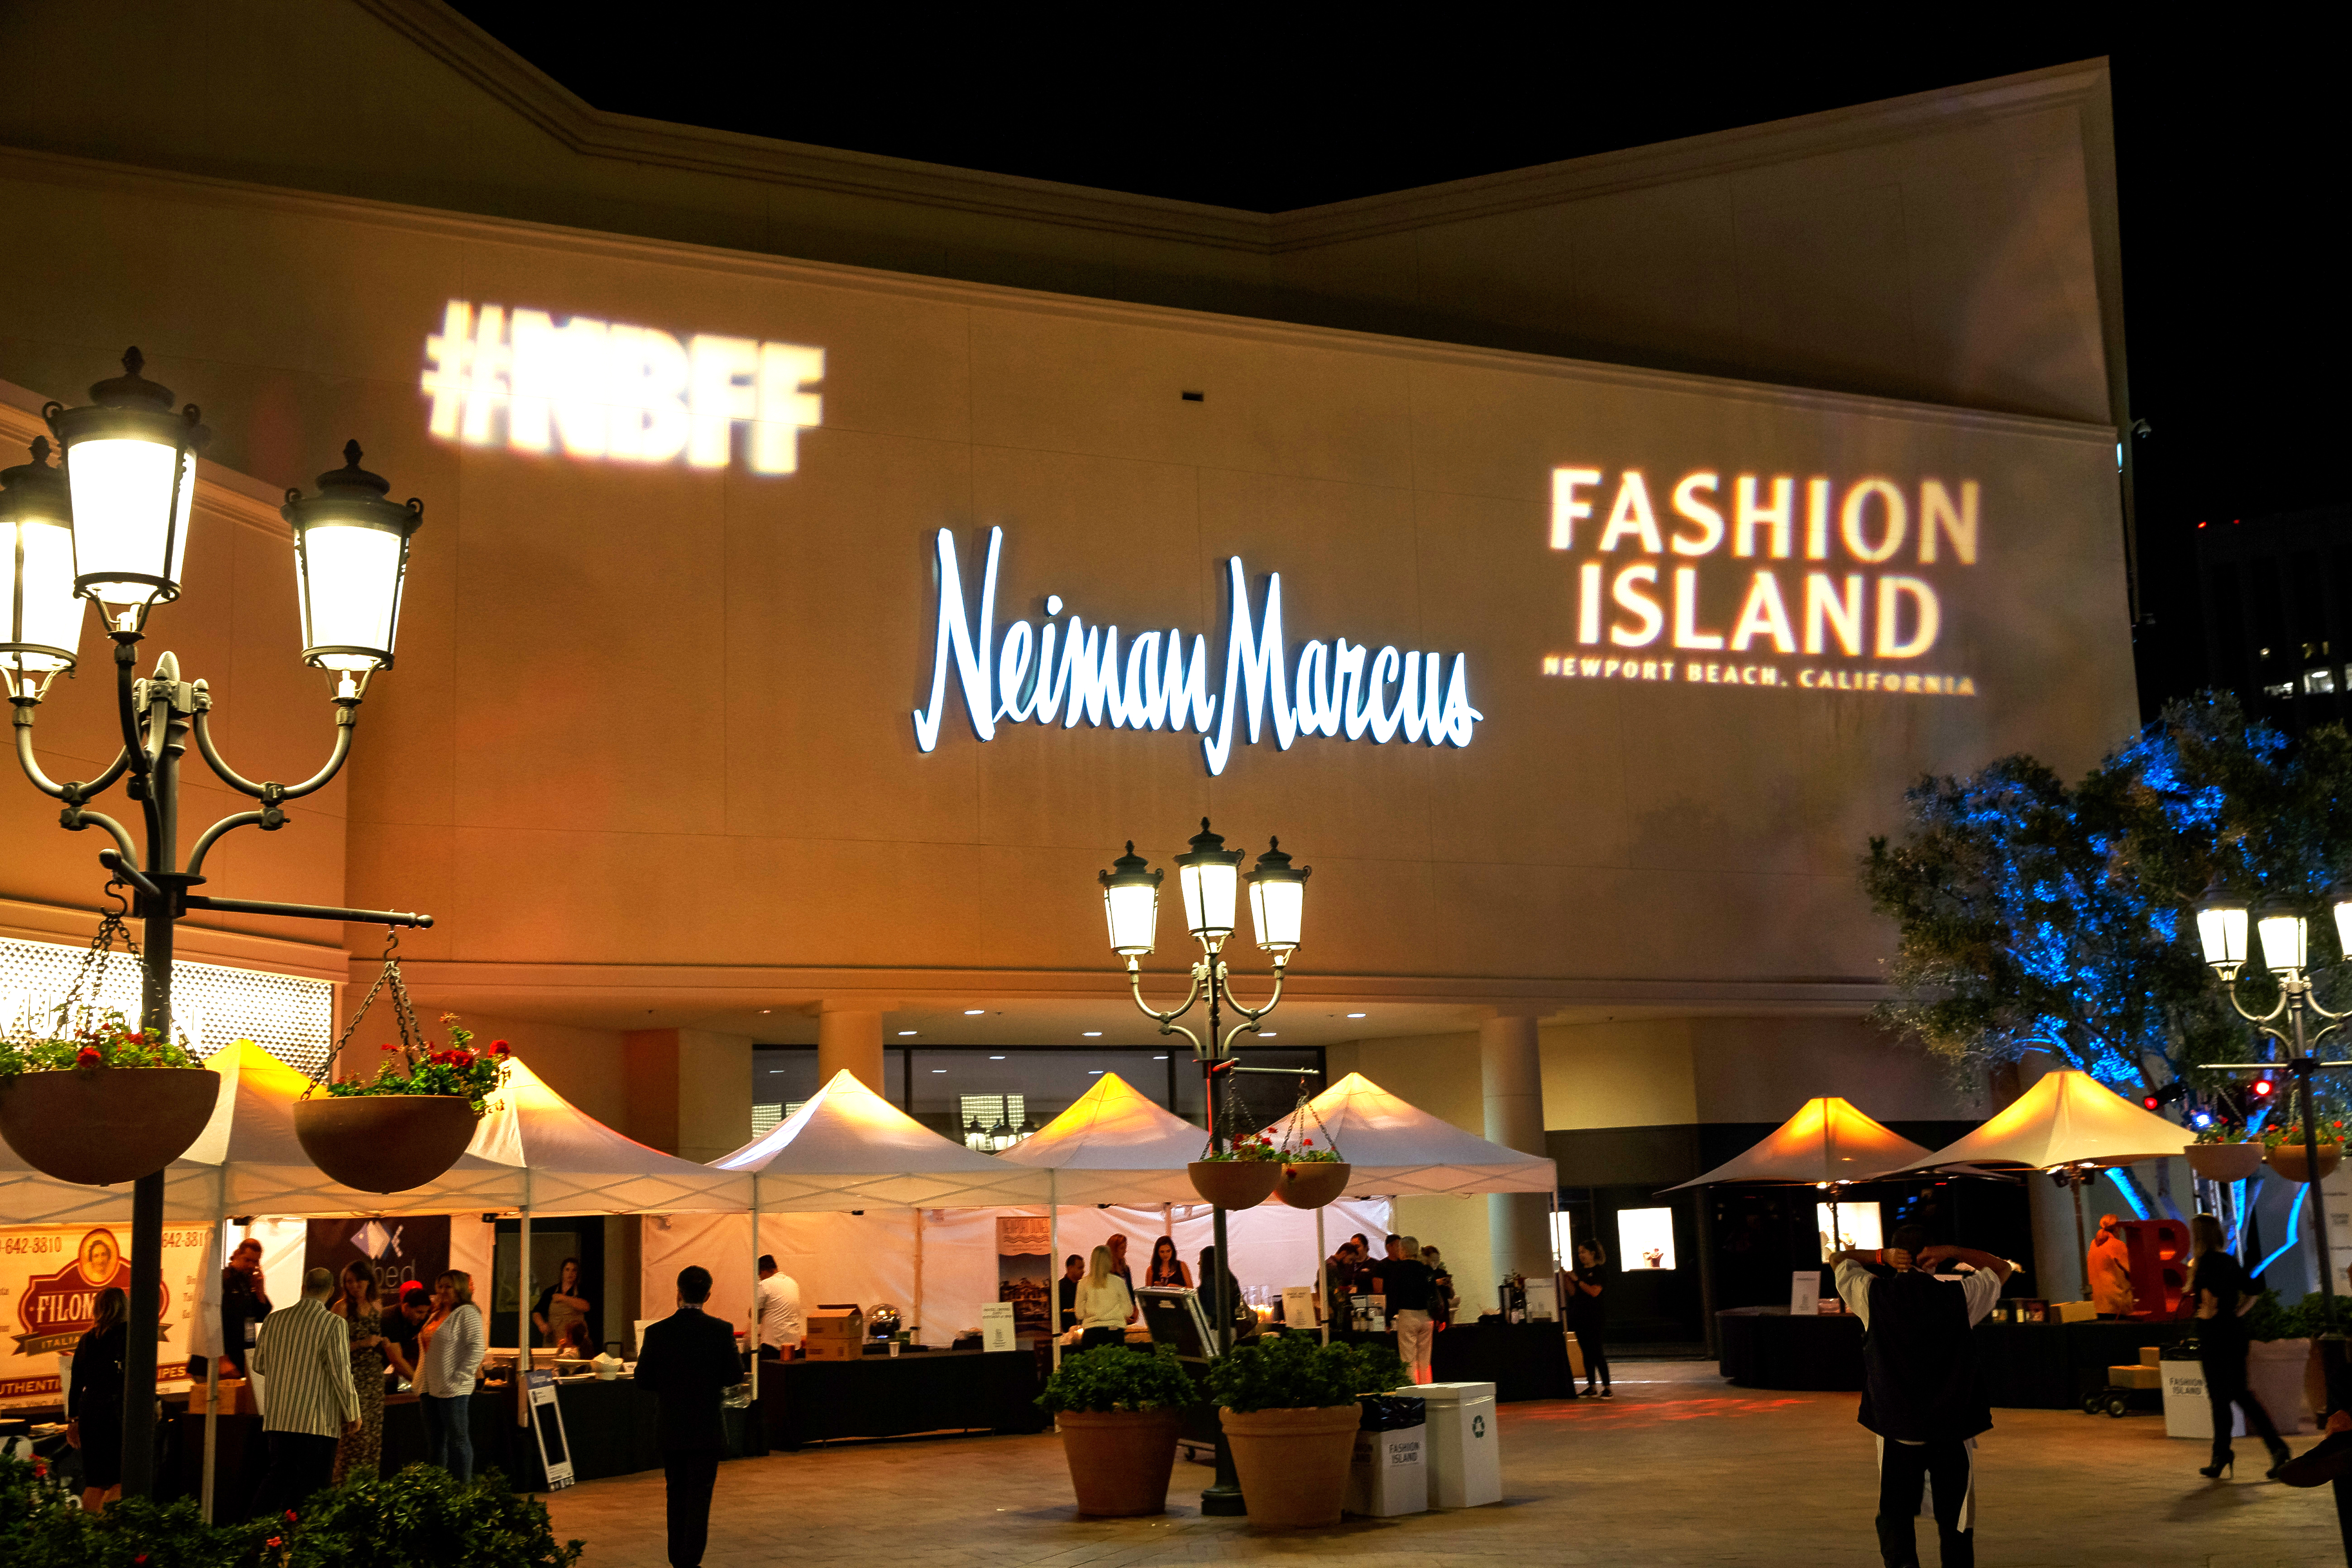 Newport Beach Film Festival at Fashion Island - Orange County Zest